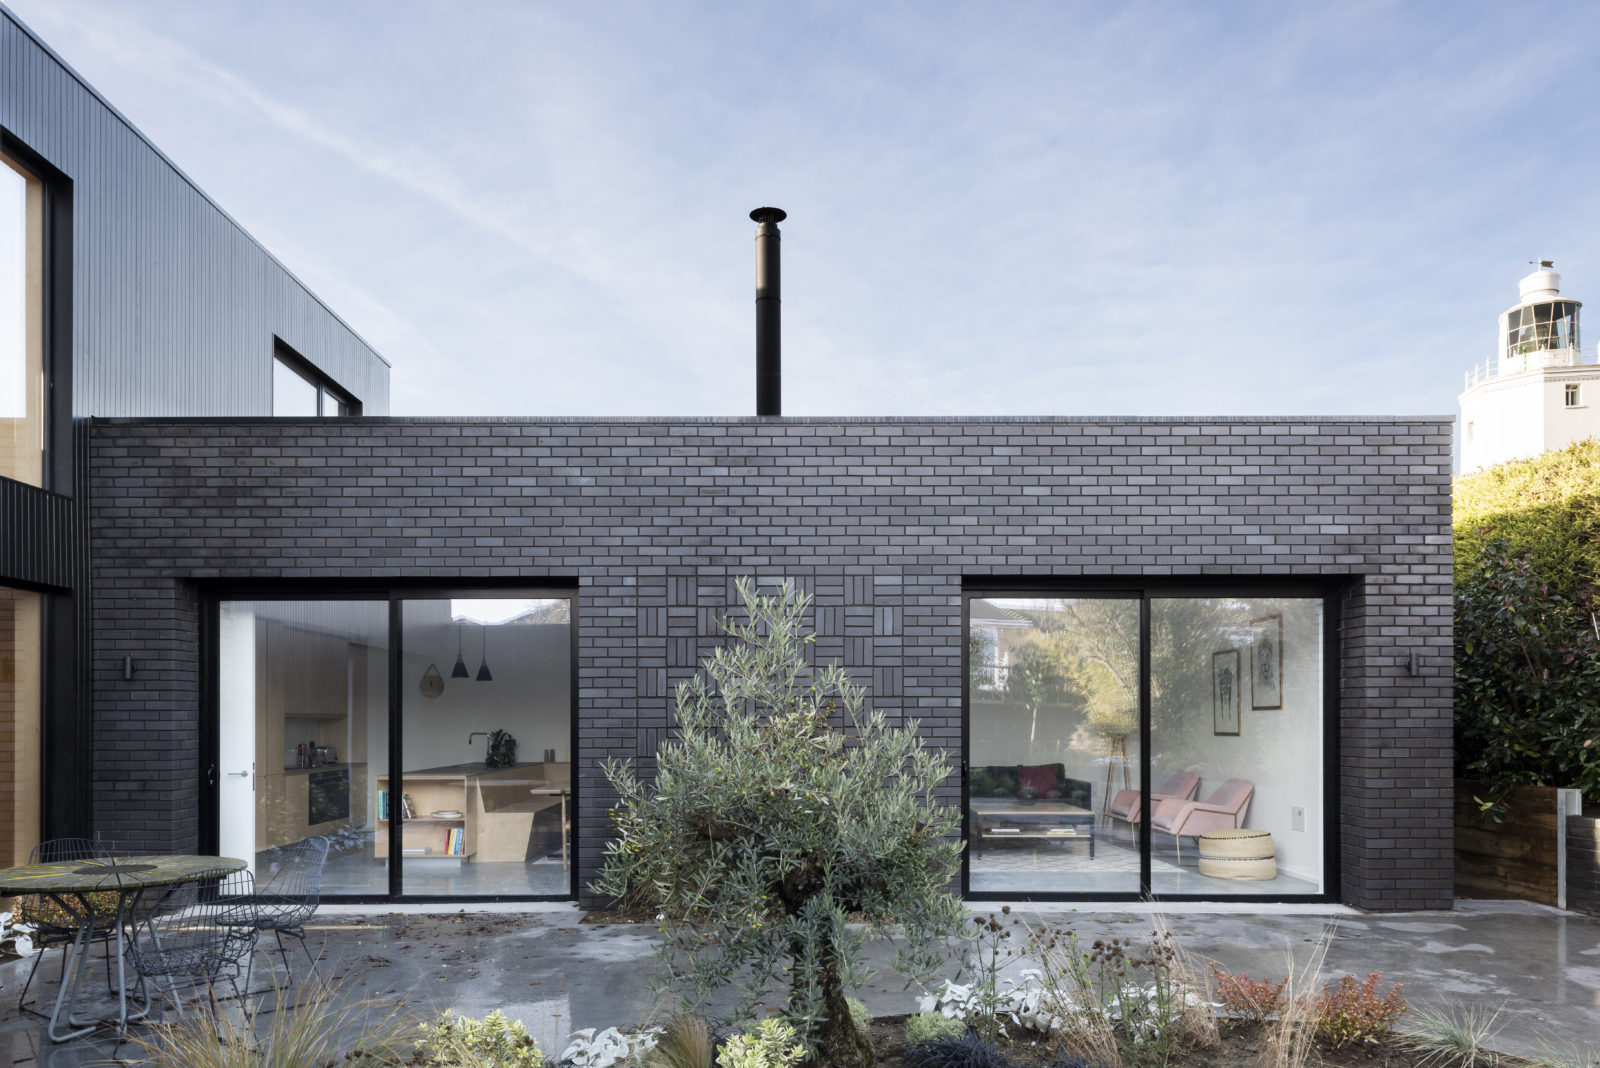 Coastal Kent retreat Flint House has black patterned brickwork